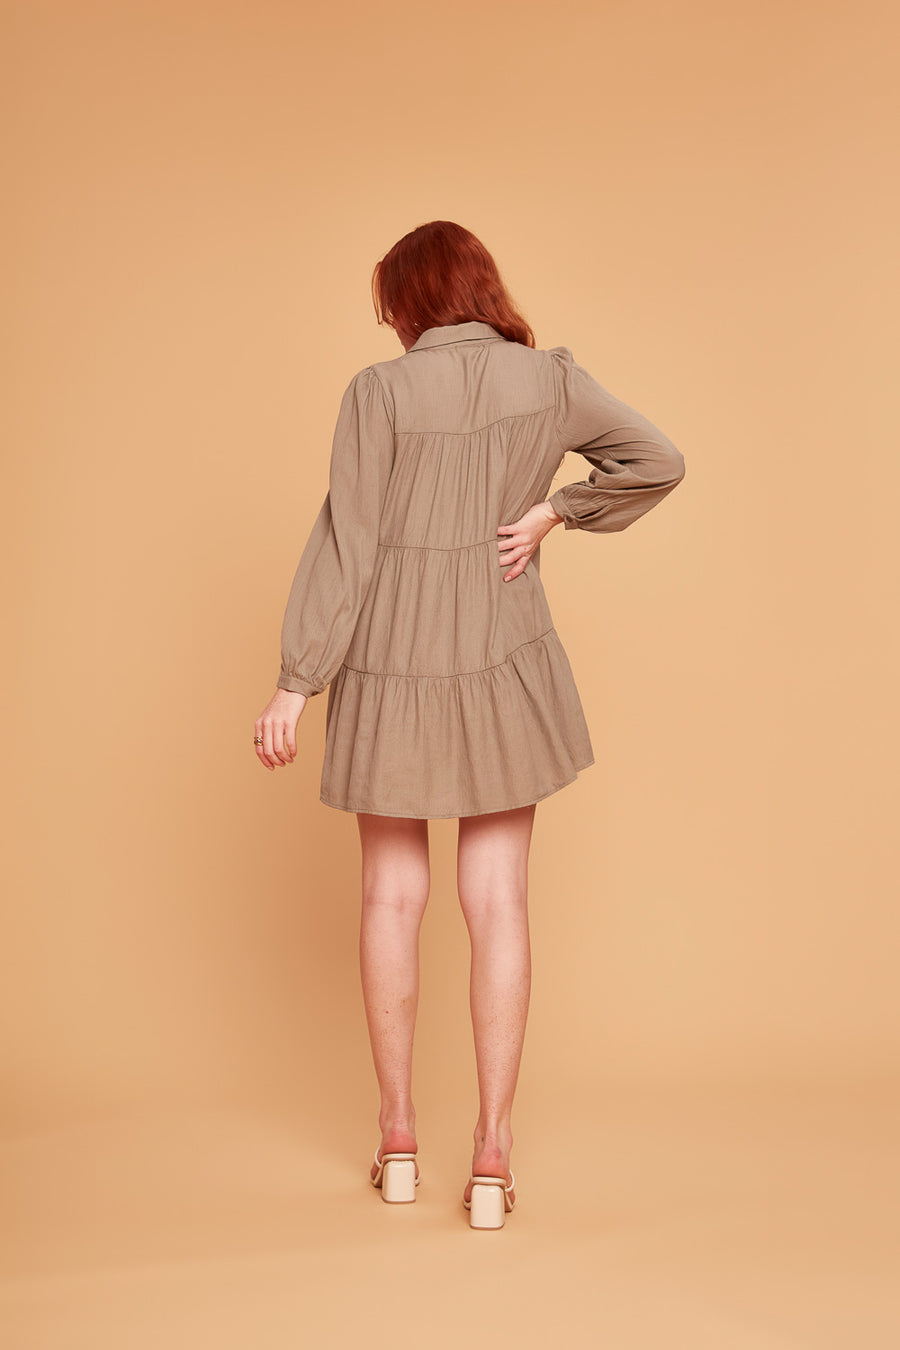 Olive Long Sleeve Button Up Dress - Trixxi Clothing